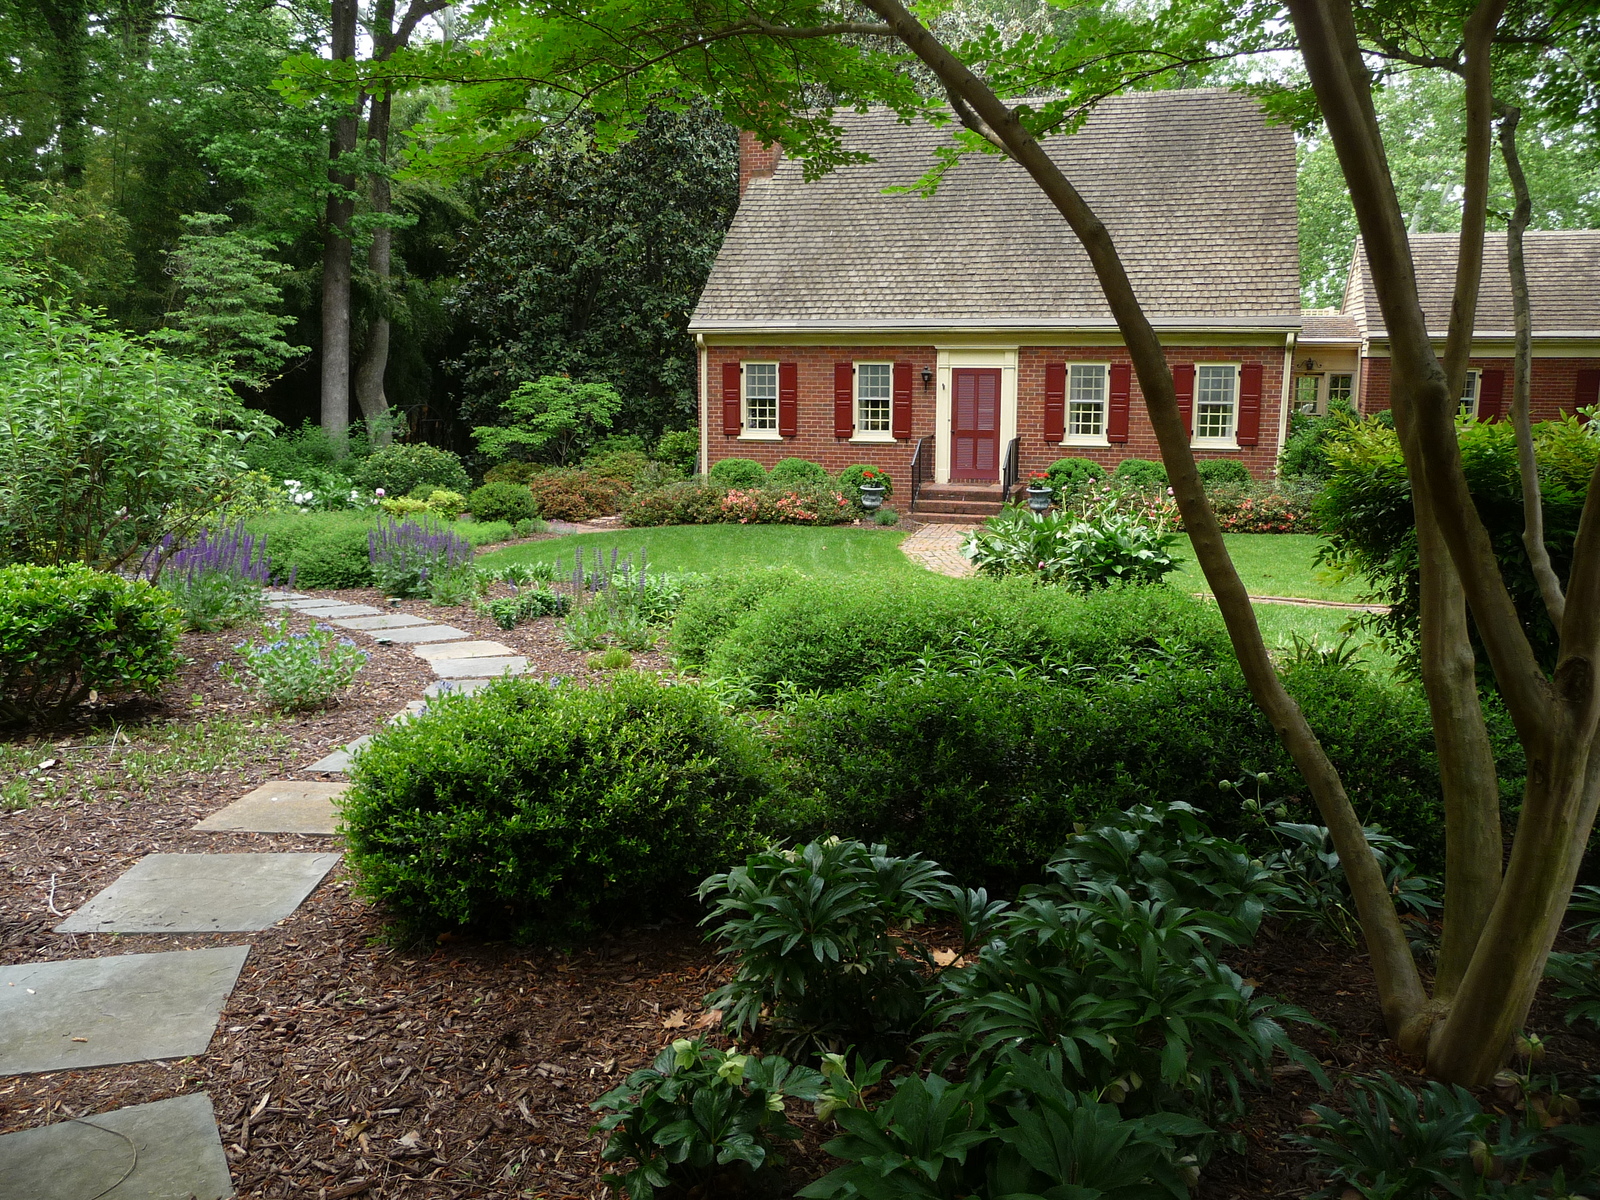  : Foundations : Richmond VA Landscape Designer: Gardens by Monit, LLC: Monit Rosendale landscape designer Richmond and Charlottesville Virginia and Fredericksburg Virginia and Williamsburg Virginia